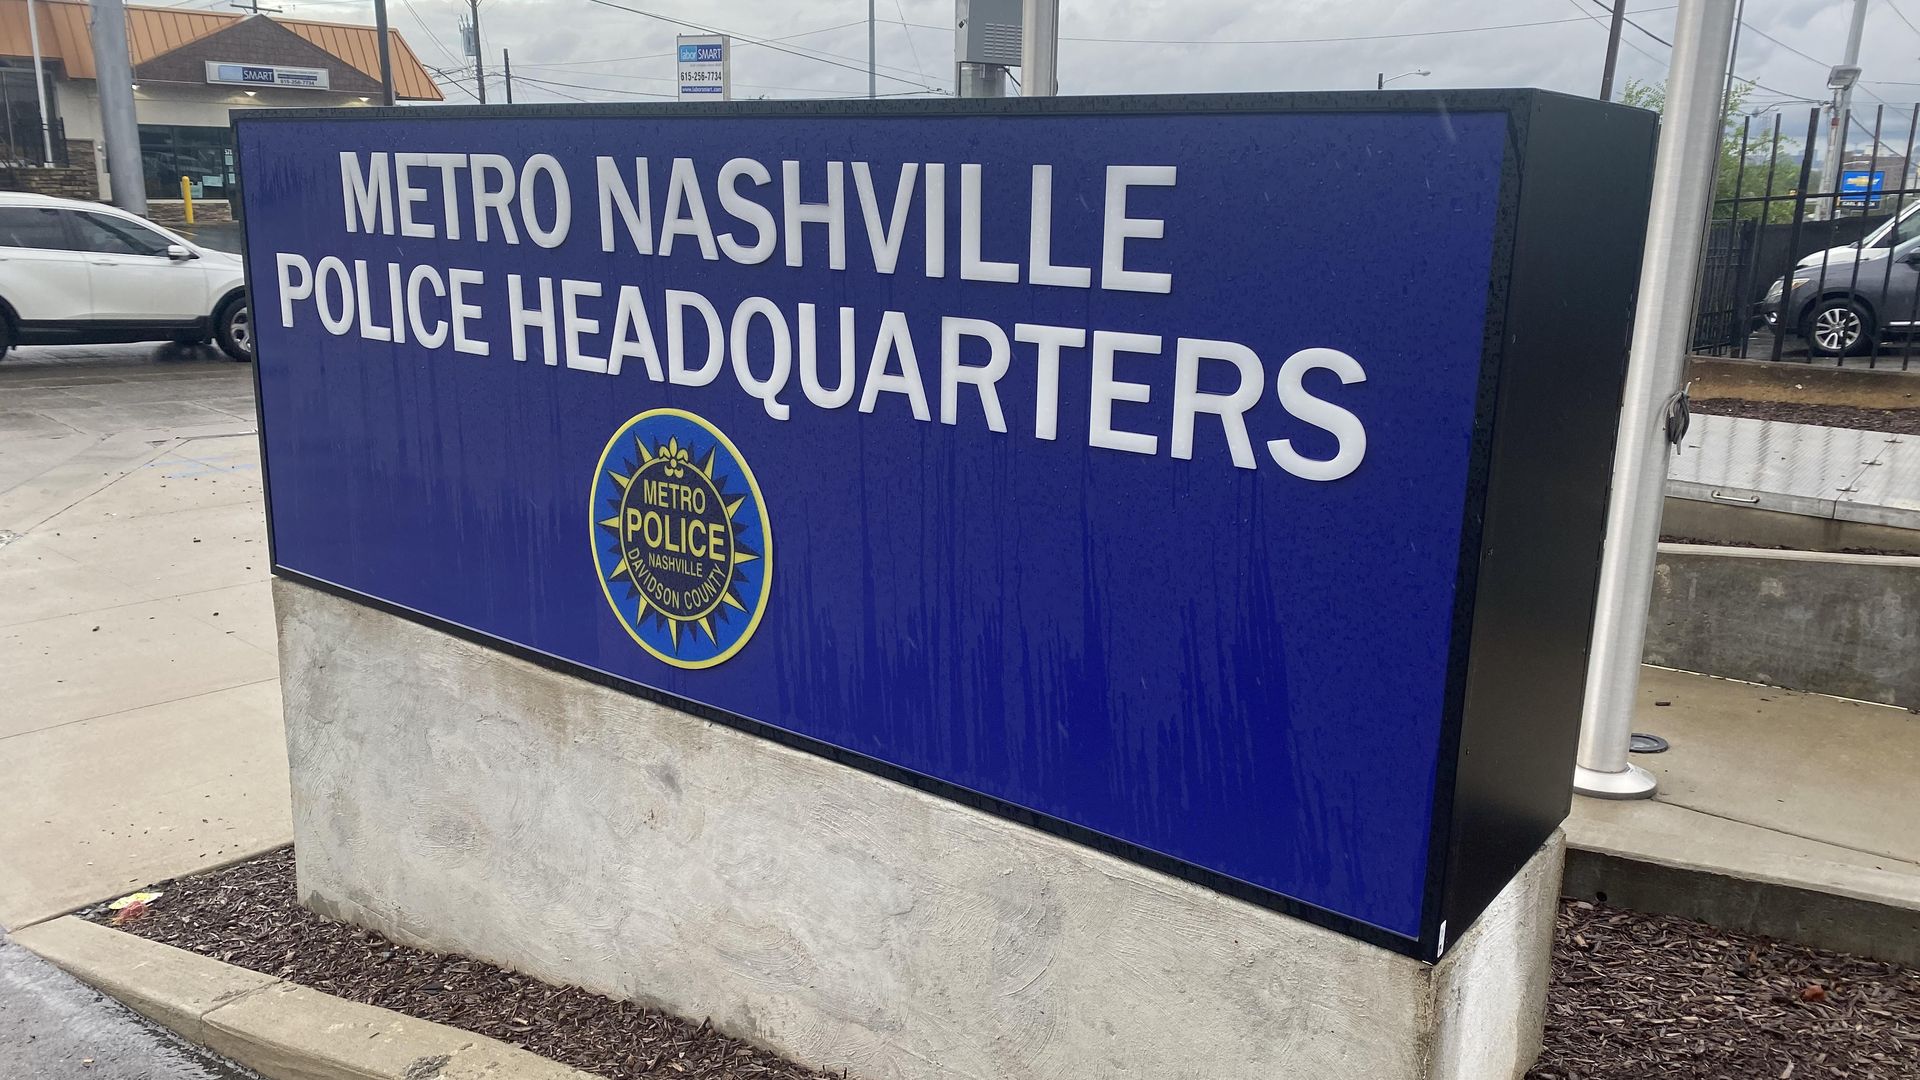 Metro Nashville Police Headquarters sign